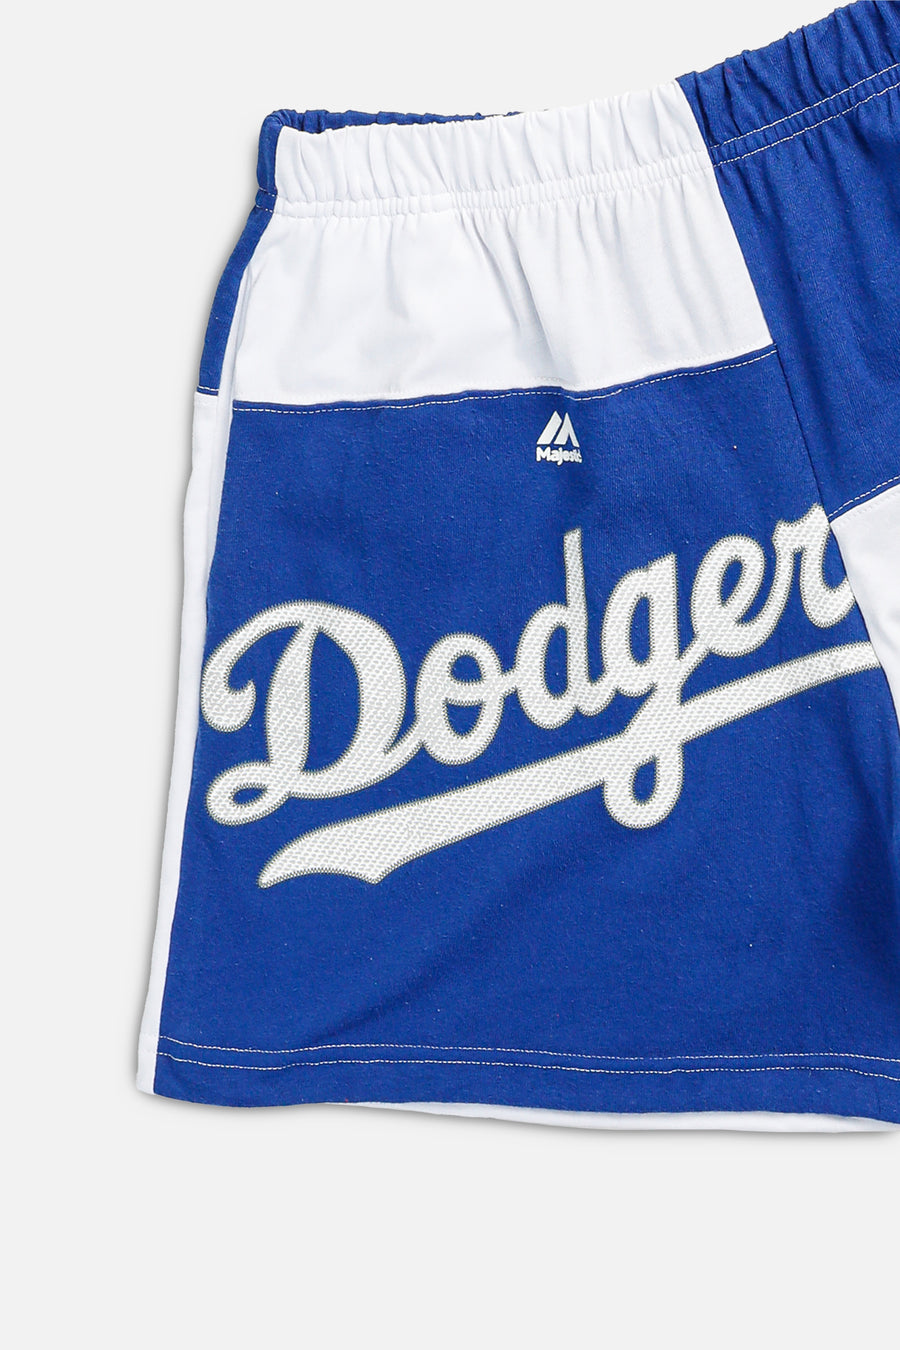 Unisex Rework LA Dodgers MLB Patchwork Tee Shorts - M